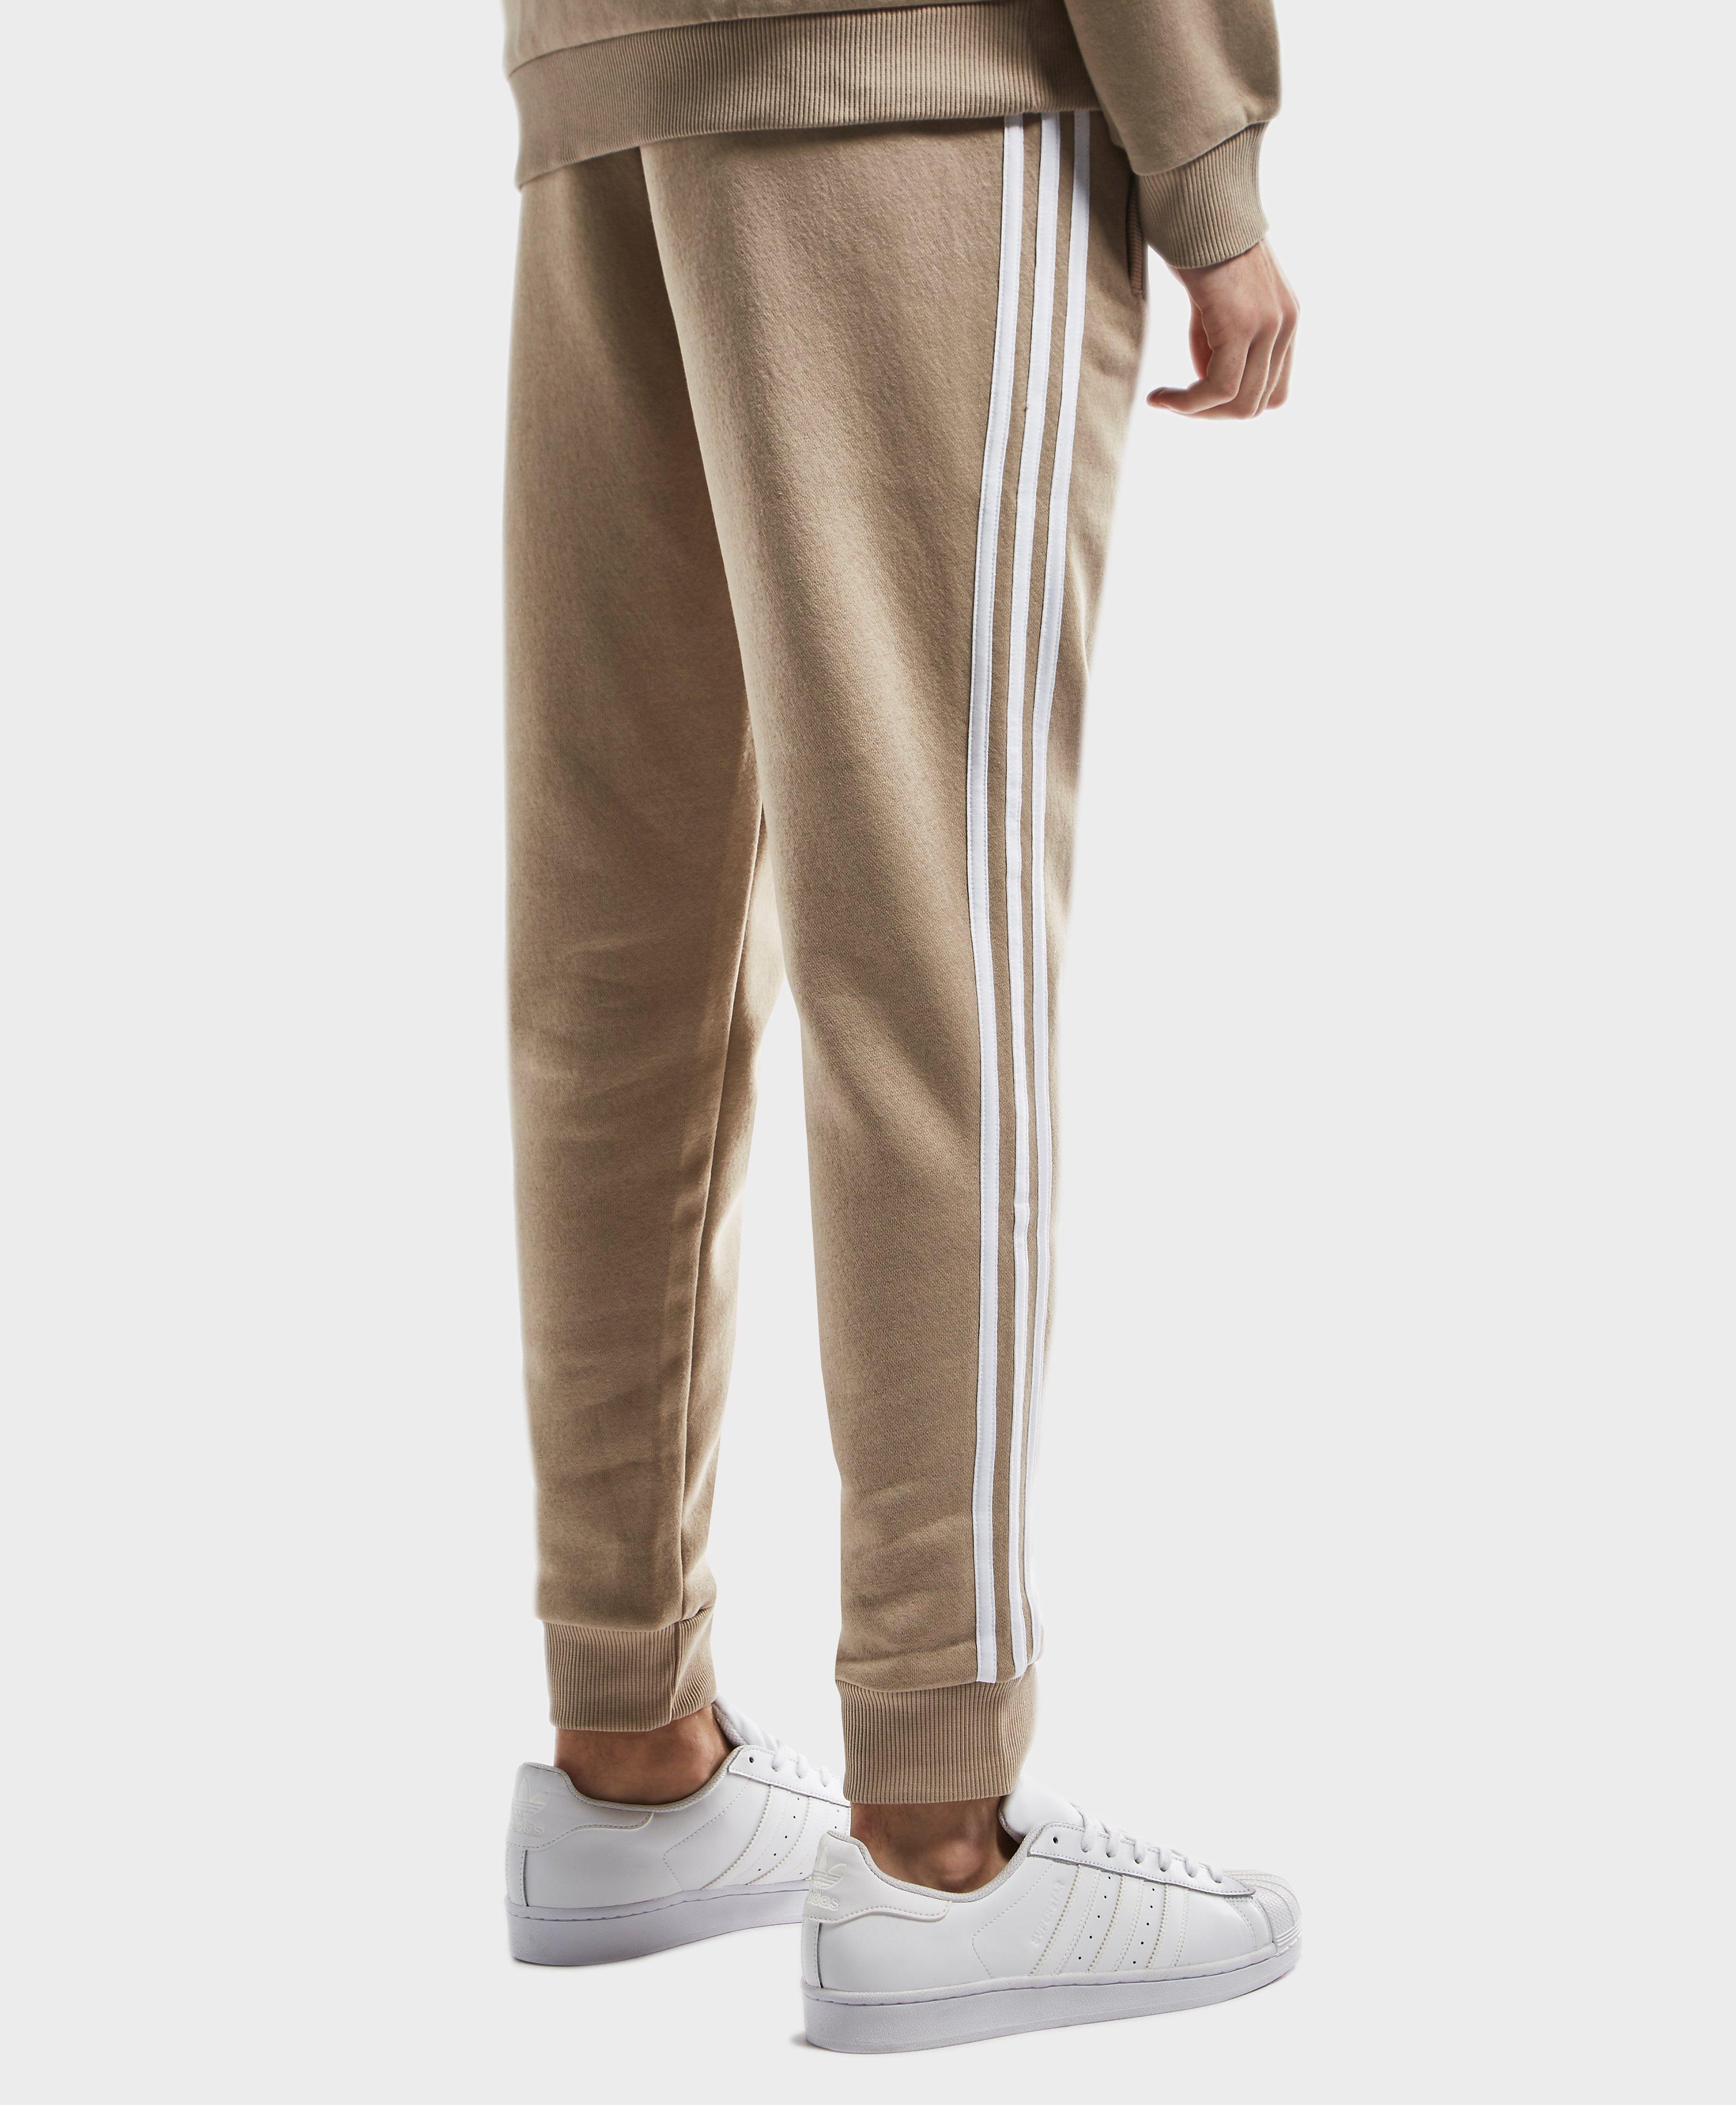 adidas Originals California Fleece Pants in Natural for Men - Lyst